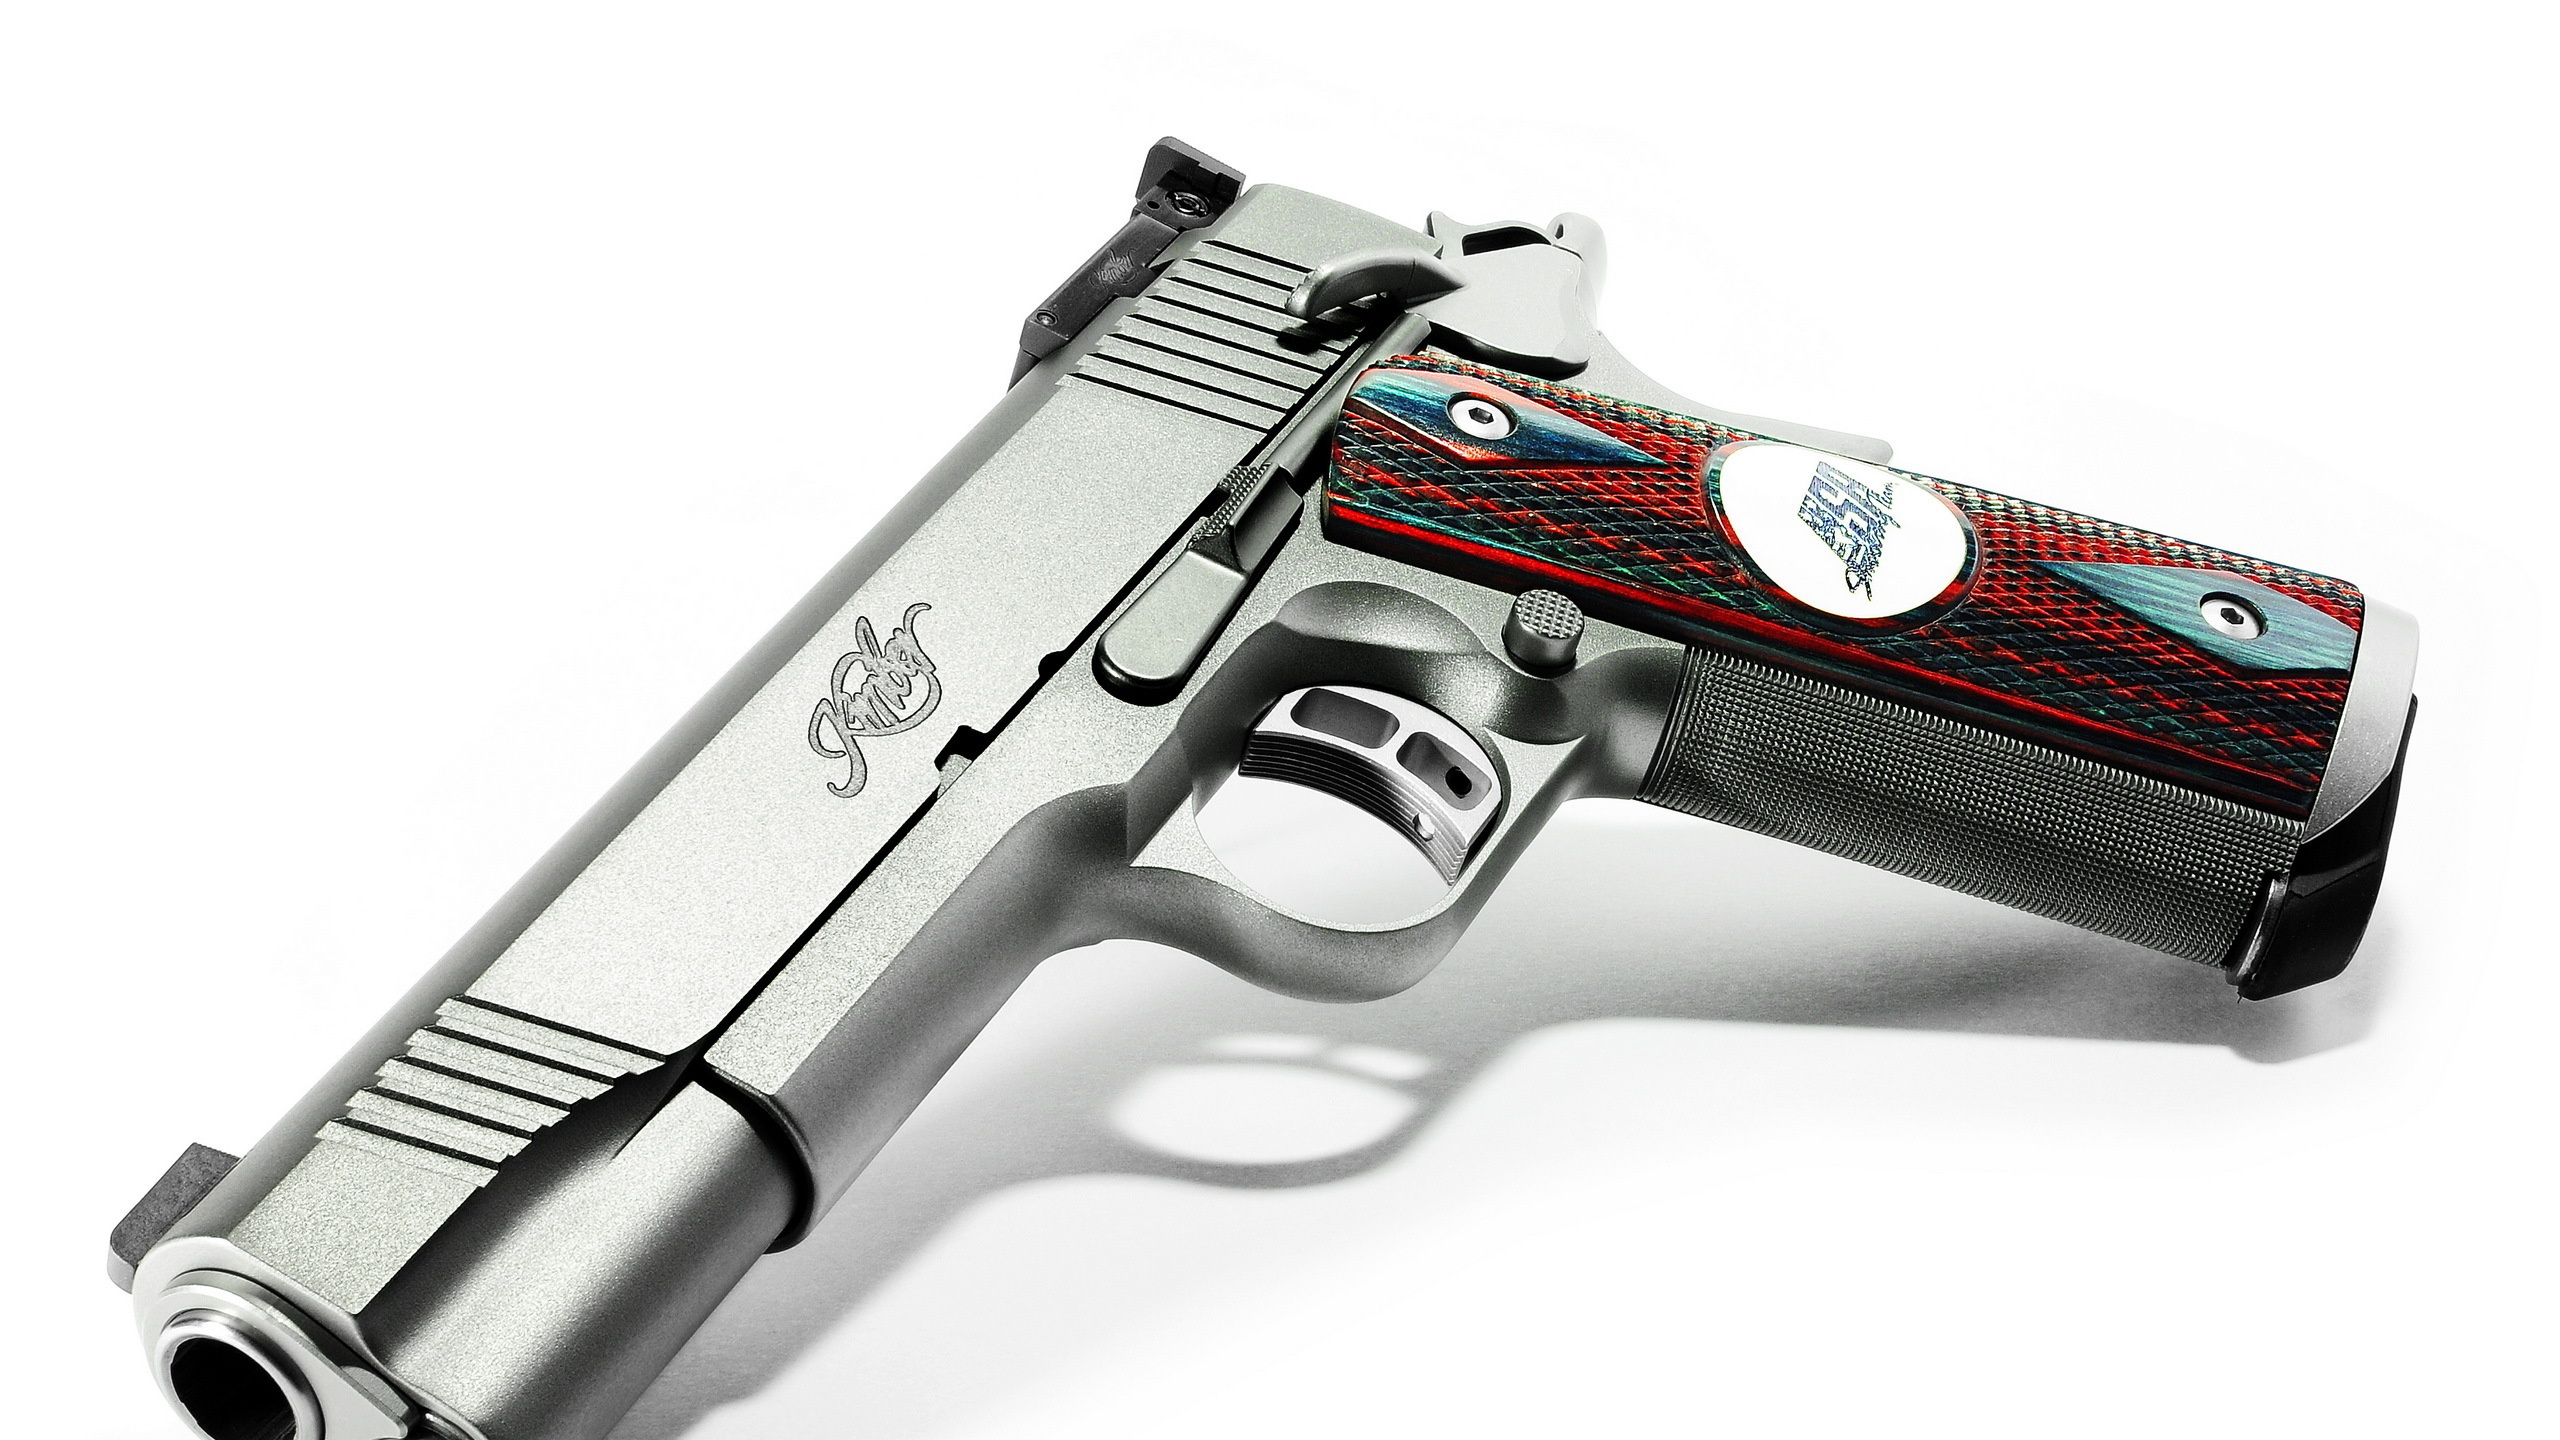 Handfeuerwaffe, M1911 Pistole, Feuerwaffe, Trigger, Gun Barrel. Wallpaper in 2560x1440 Resolution